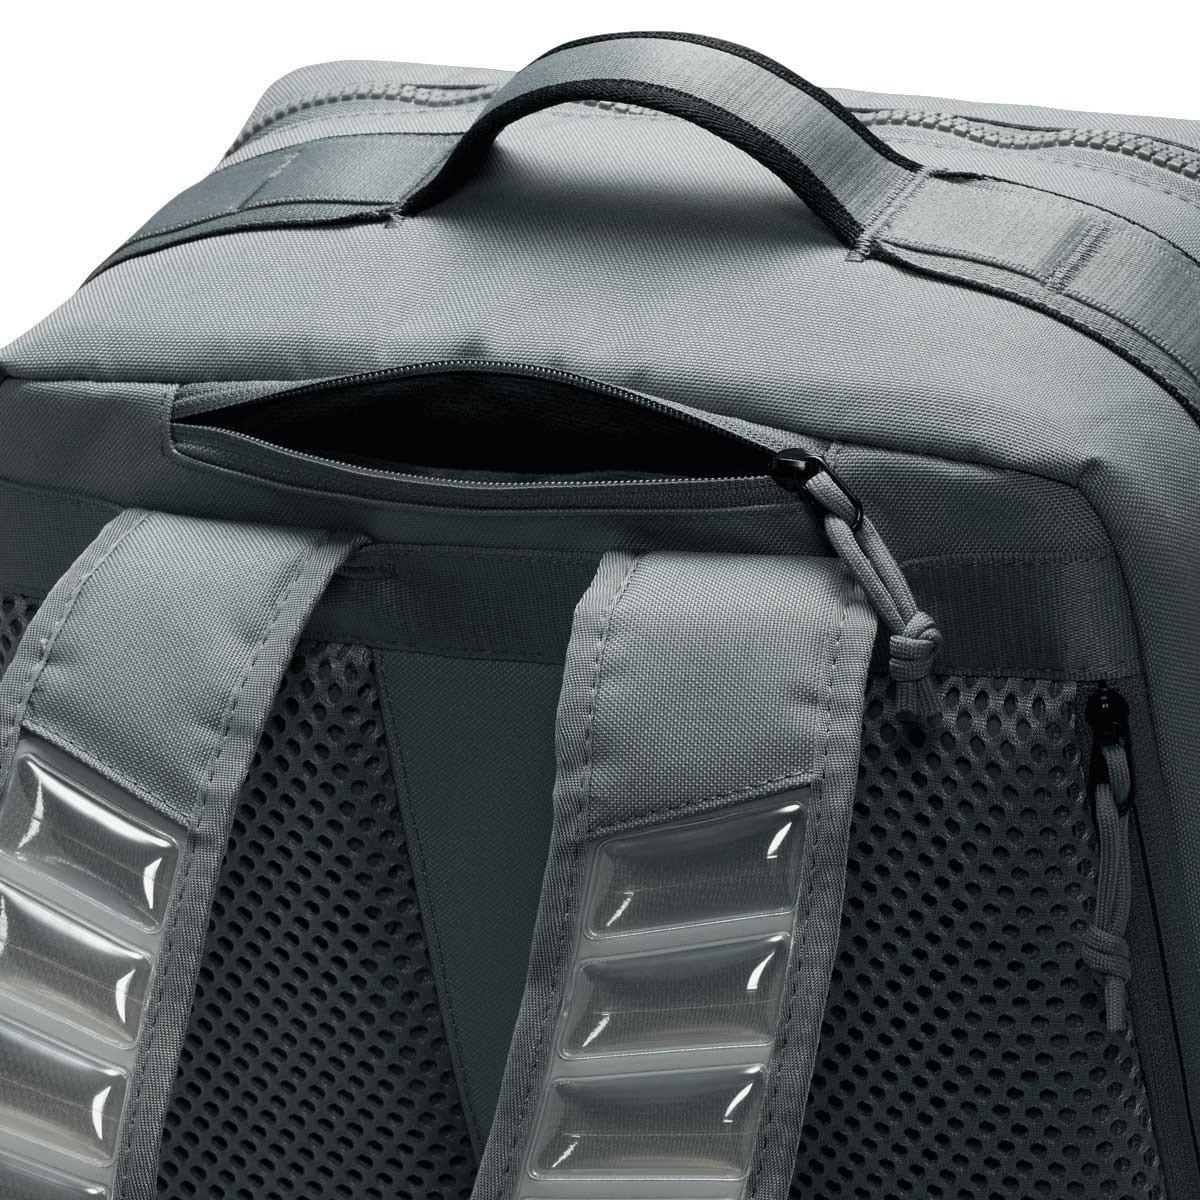 Nike Utility Elite Backpack Black